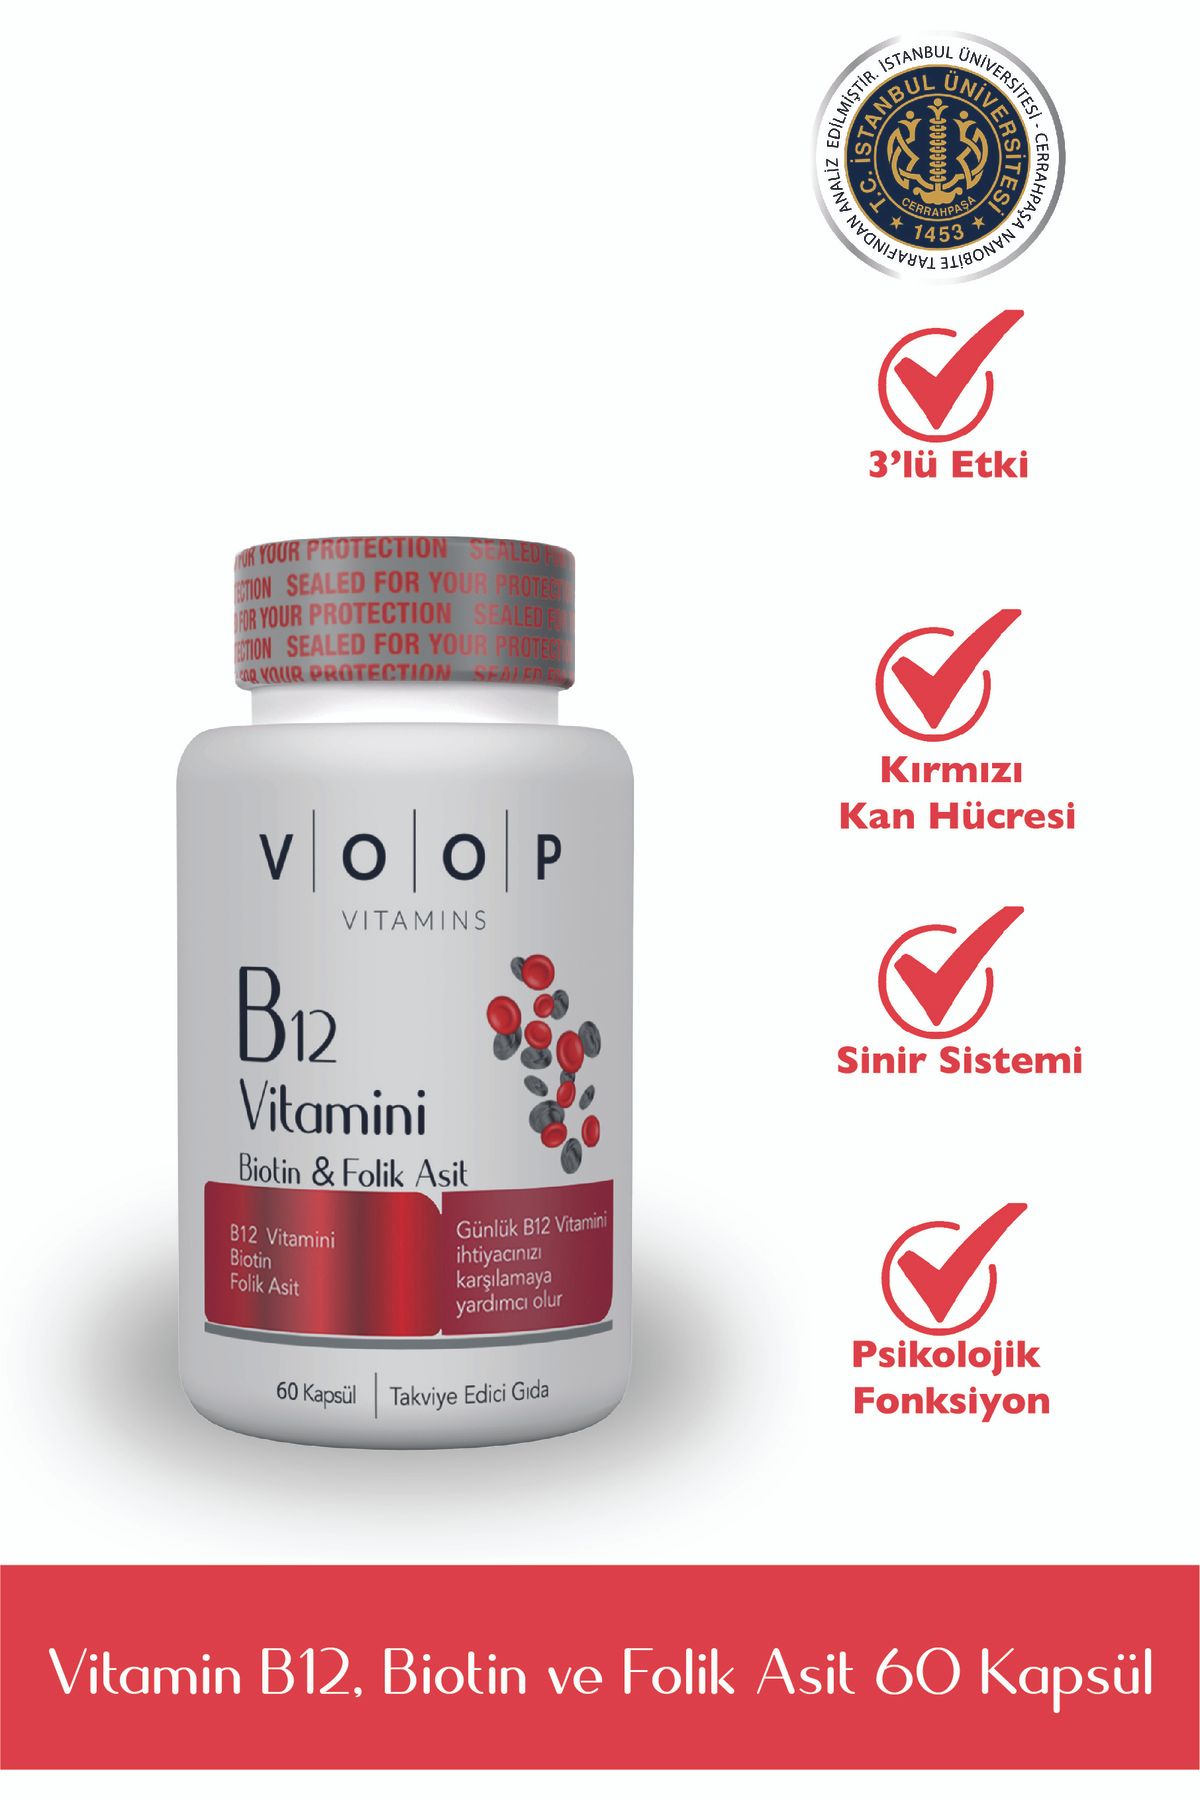 VOOP B12 Vitamini - Biotin & Folik Asit | 60 Kapsül